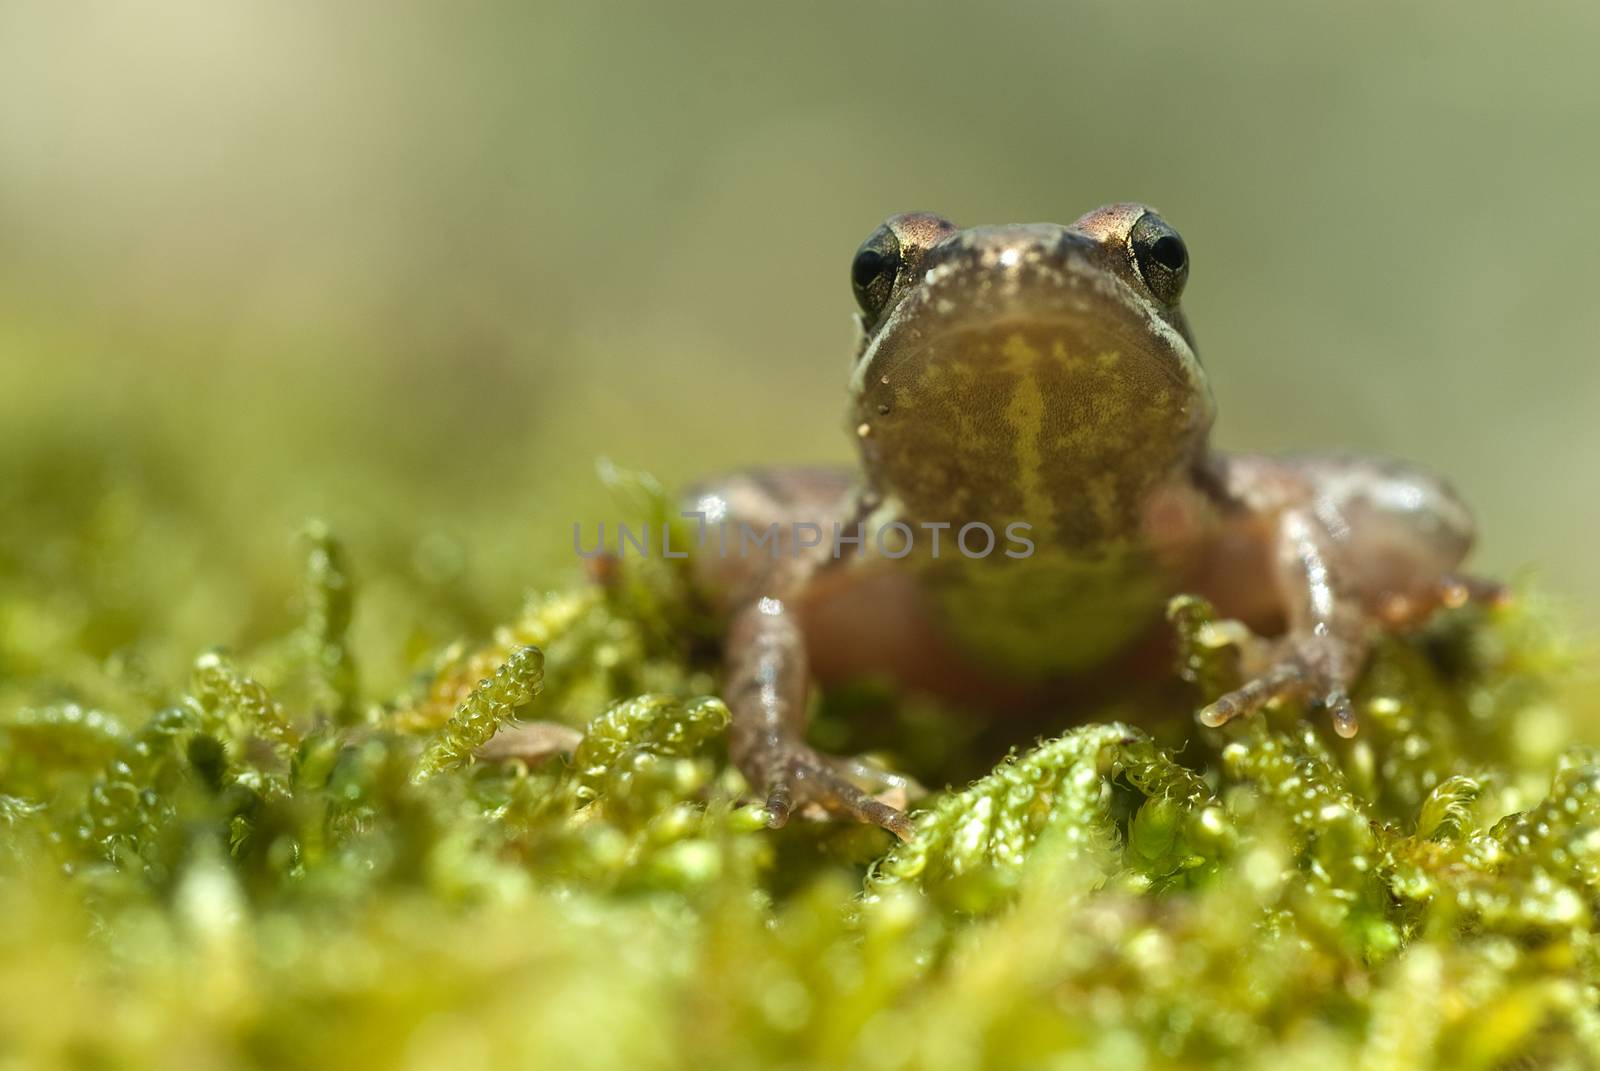 Iberian frog (Rana iberica) leggy frog  by jalonsohu@gmail.com